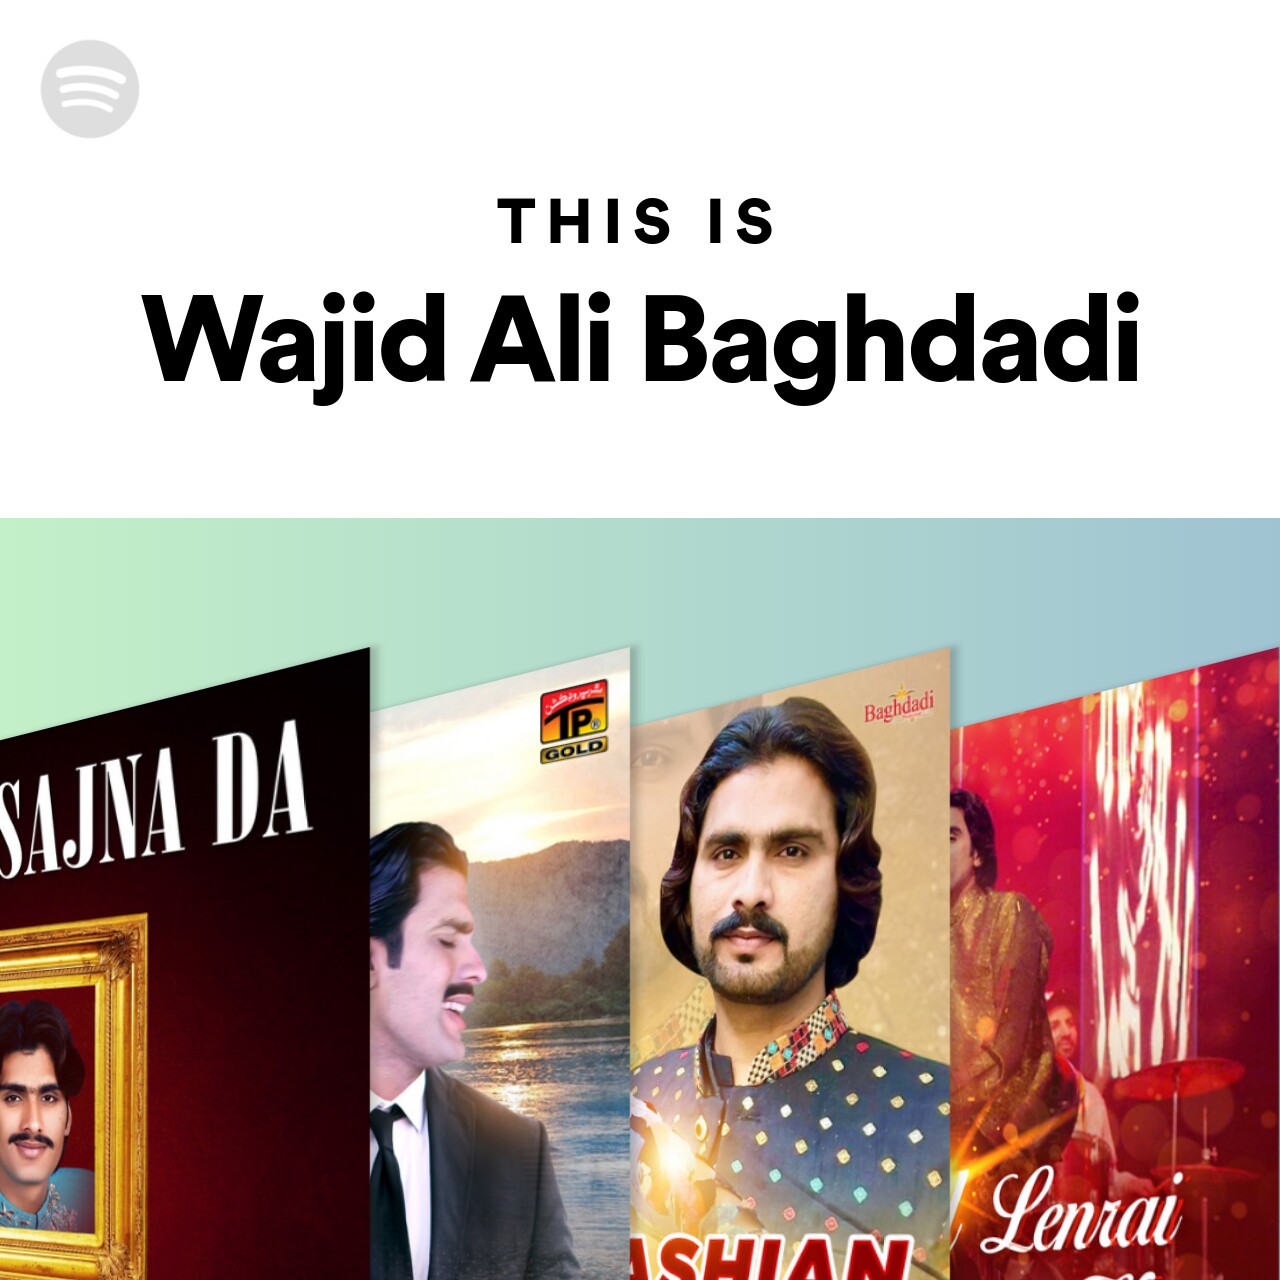 This Is Wajid Ali Baghdadi